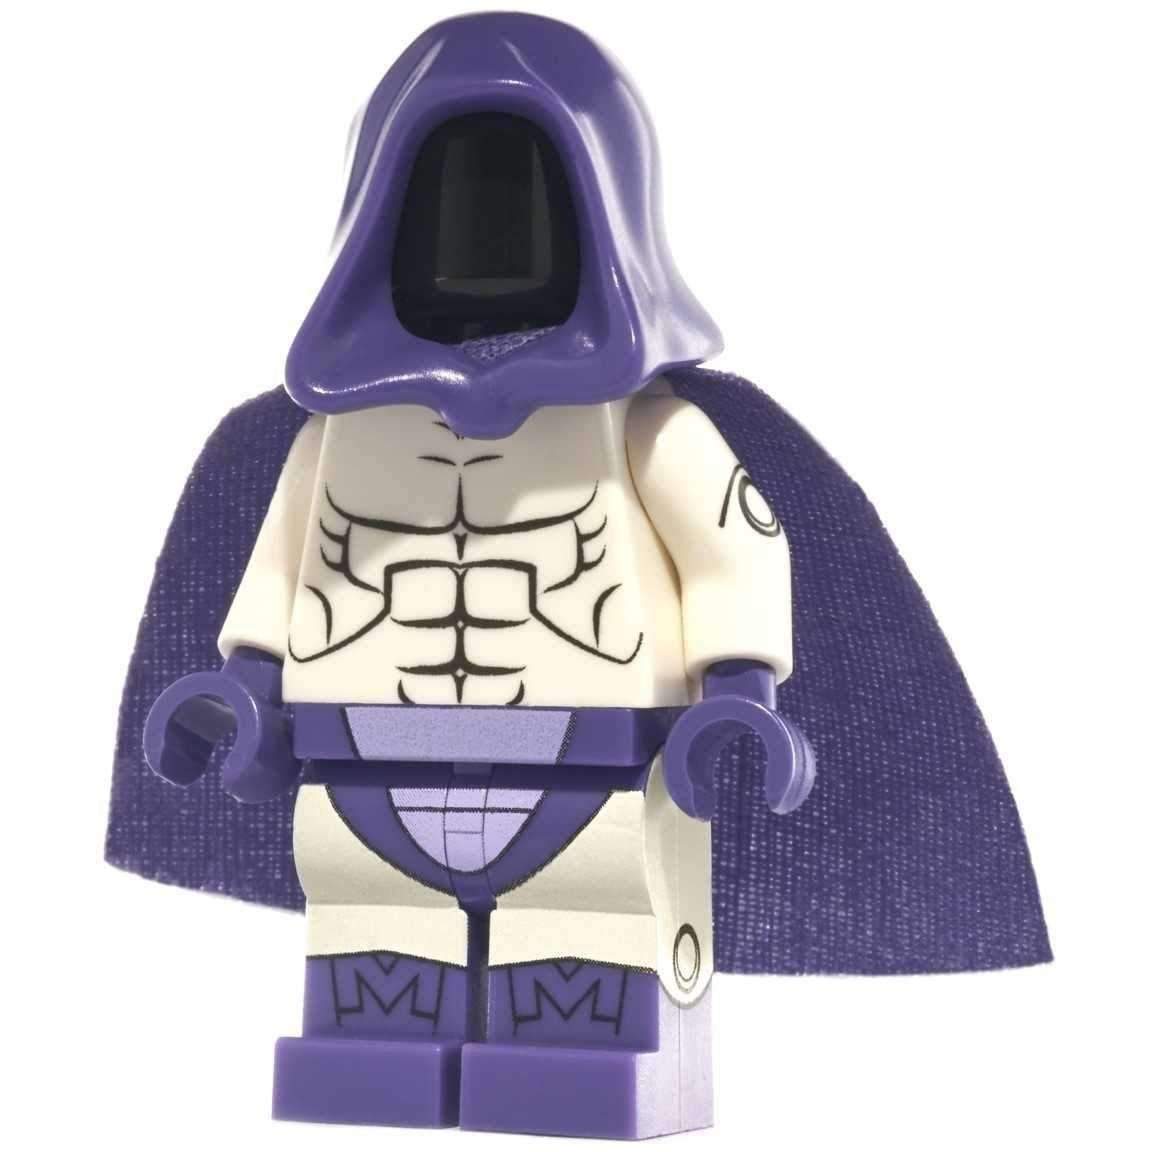 Mini Toy Overlord figure